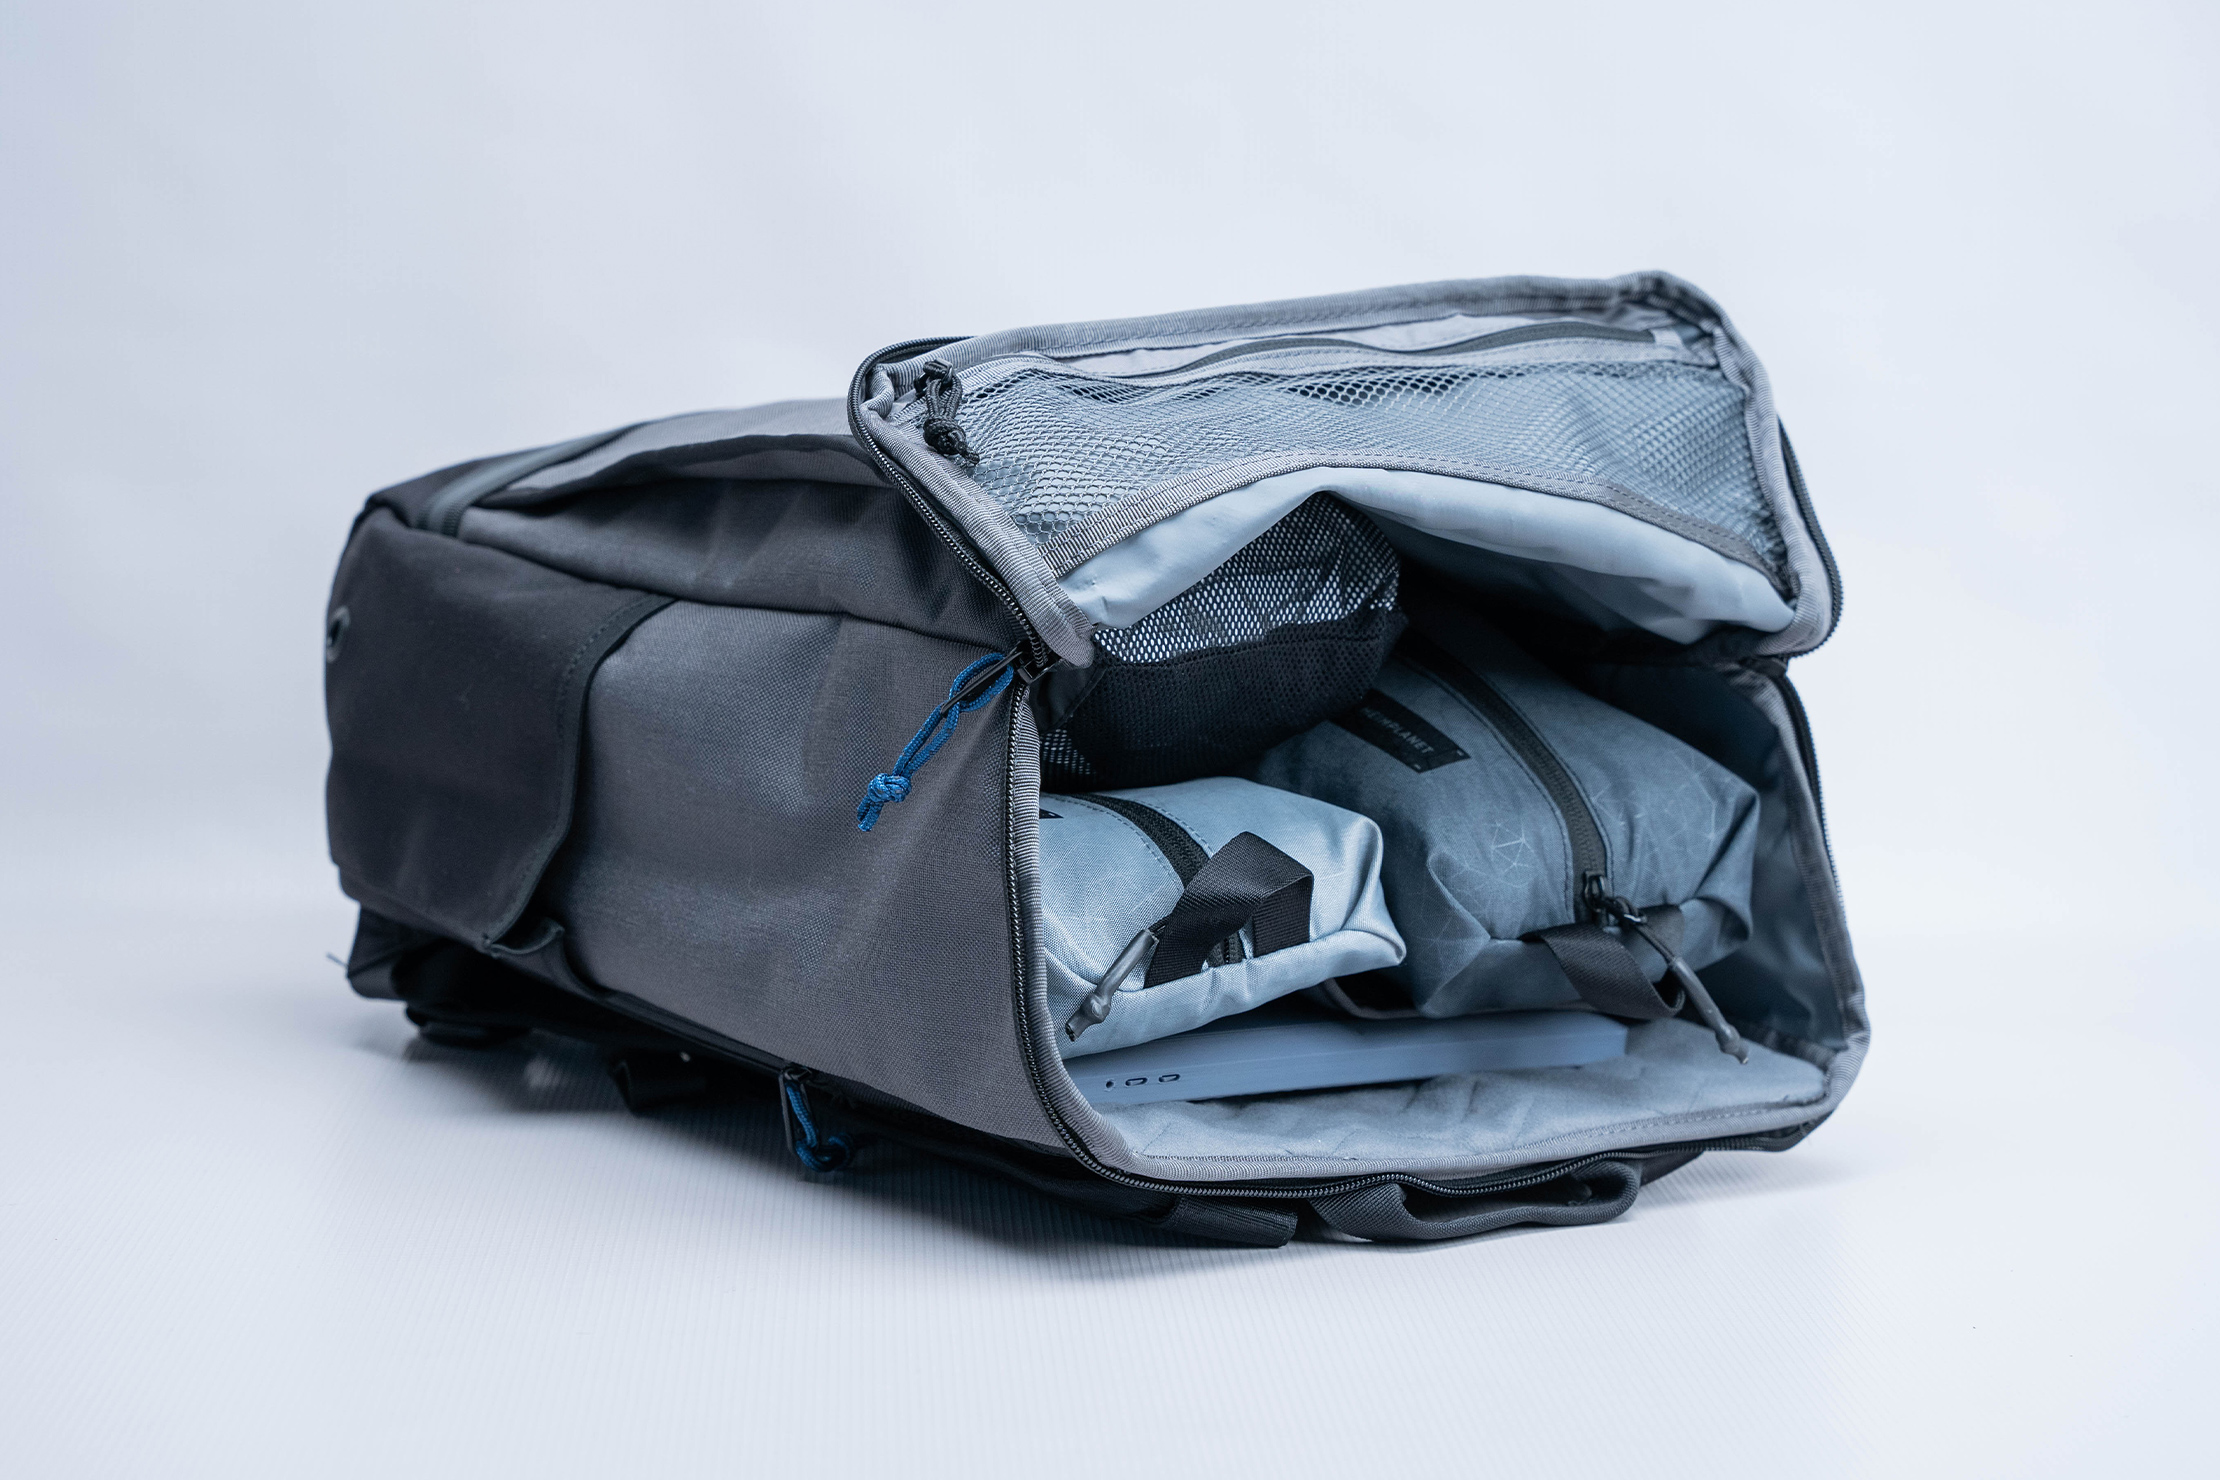 Chrome Industries Volcan Backpack Stuffed